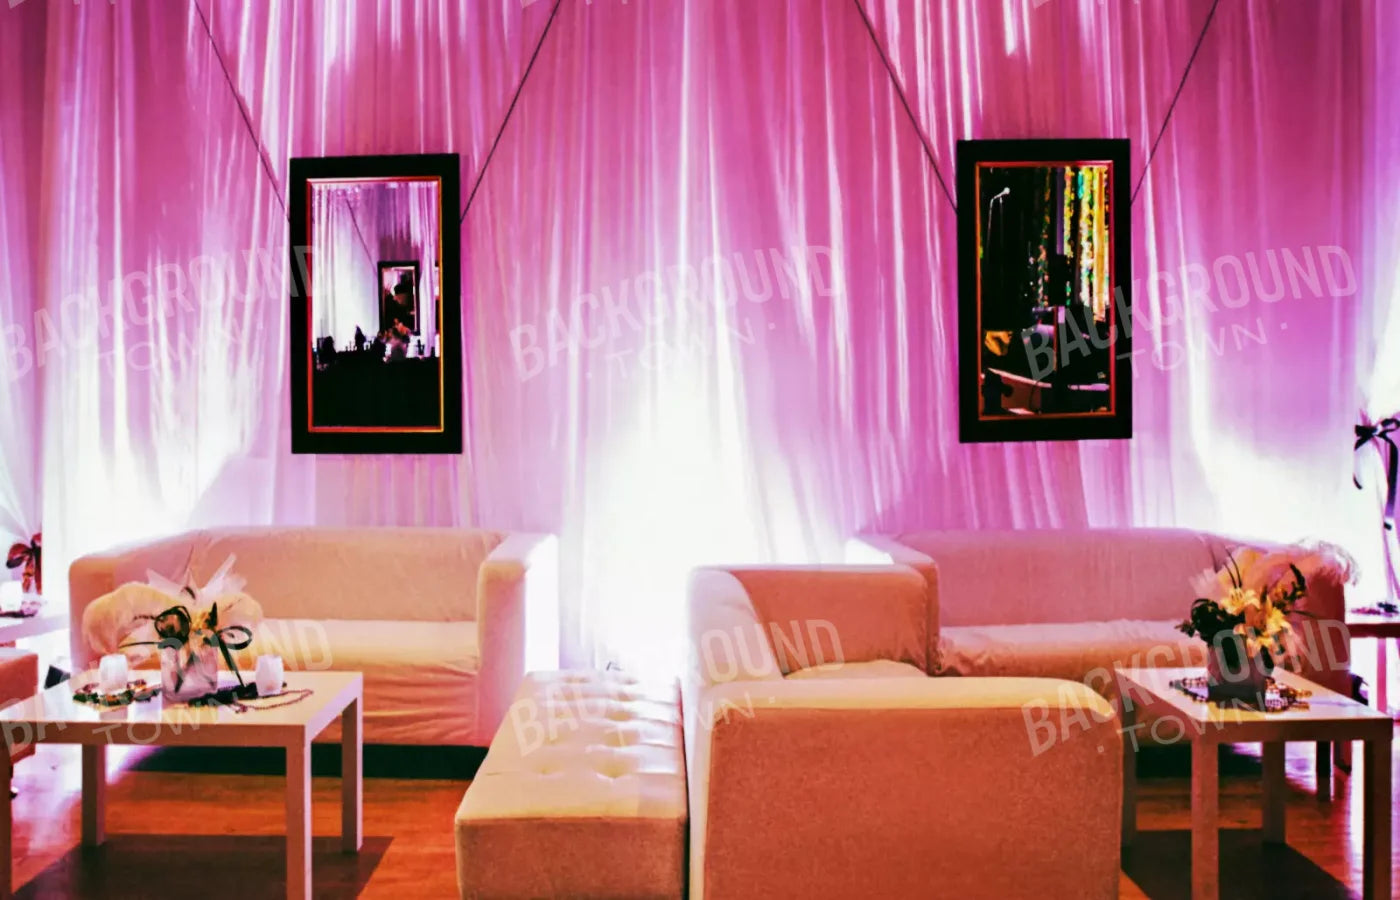 Club Lounge 12X8 Ultracloth ( 144 X 96 Inch ) Backdrop